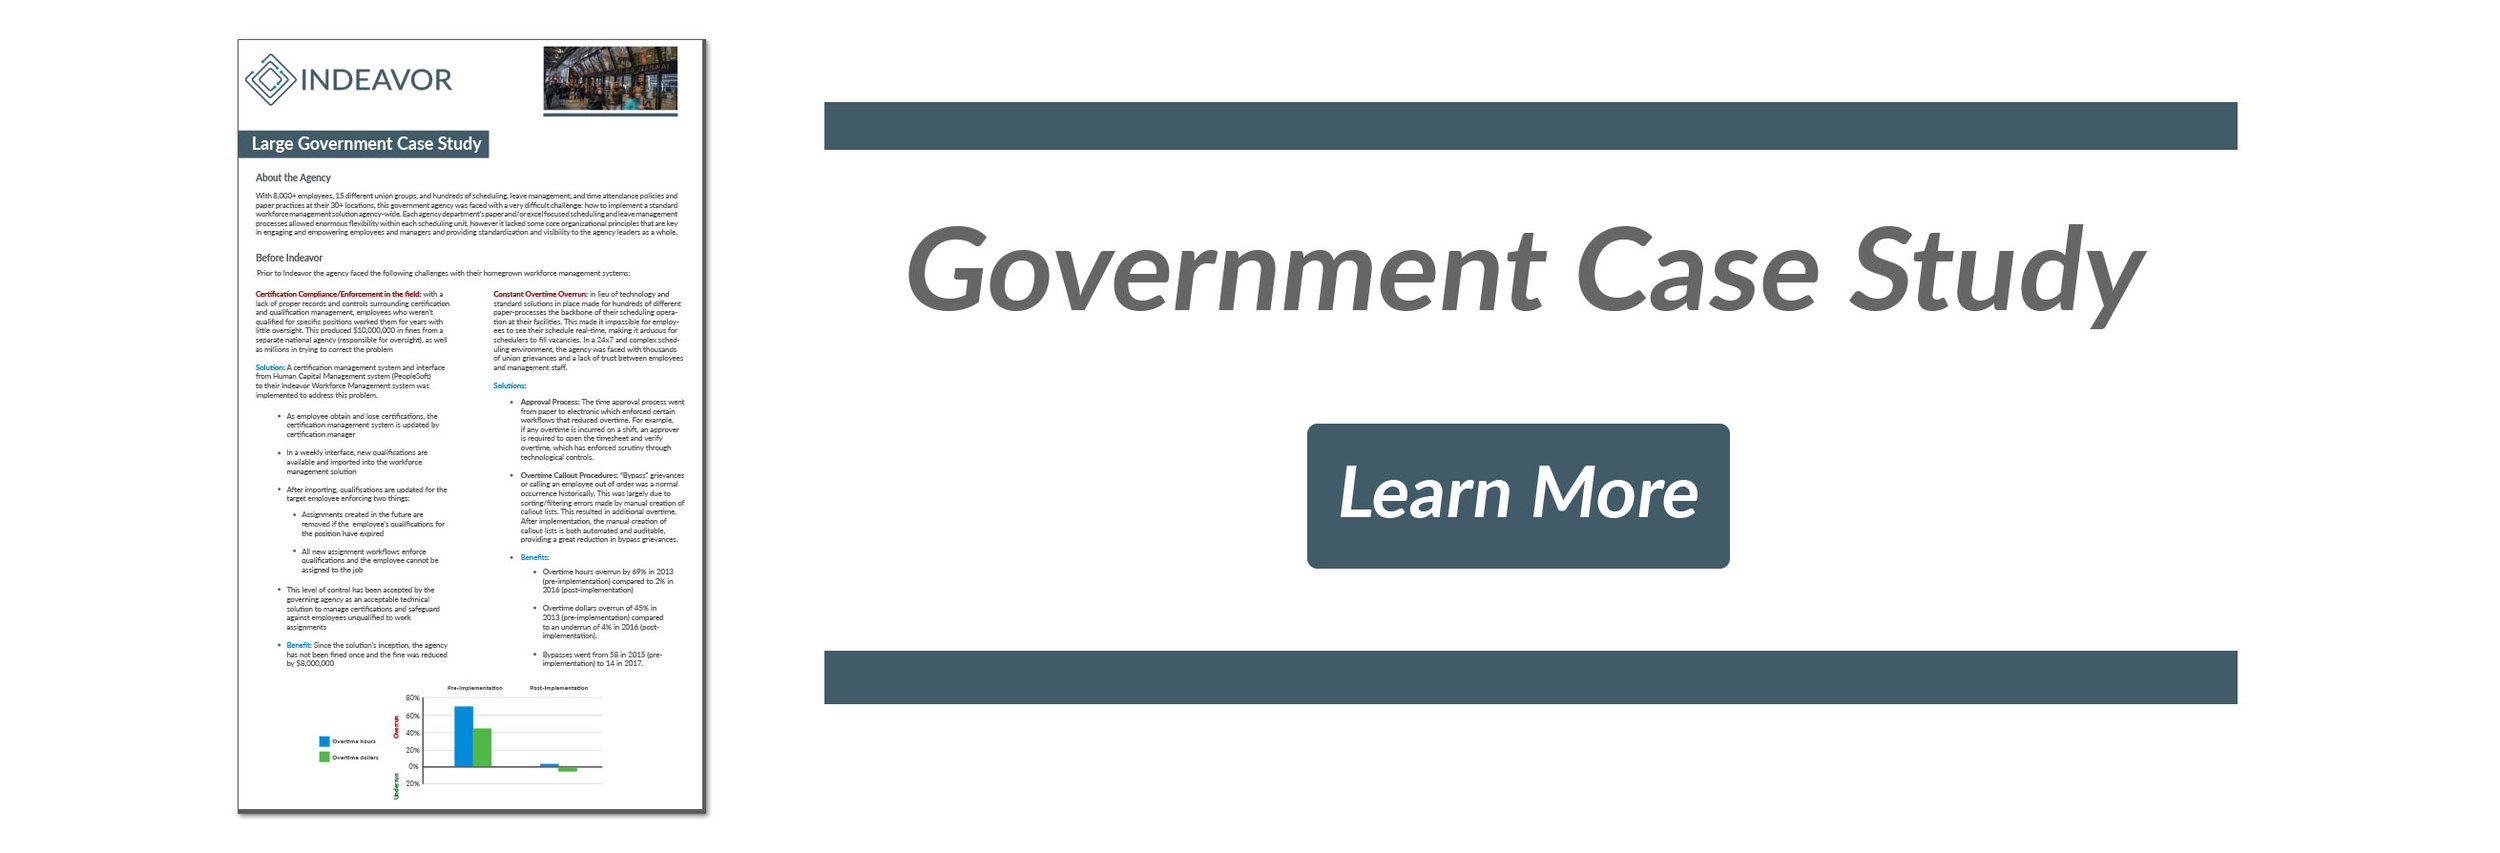 Government Case Study Blog Banner.jpg